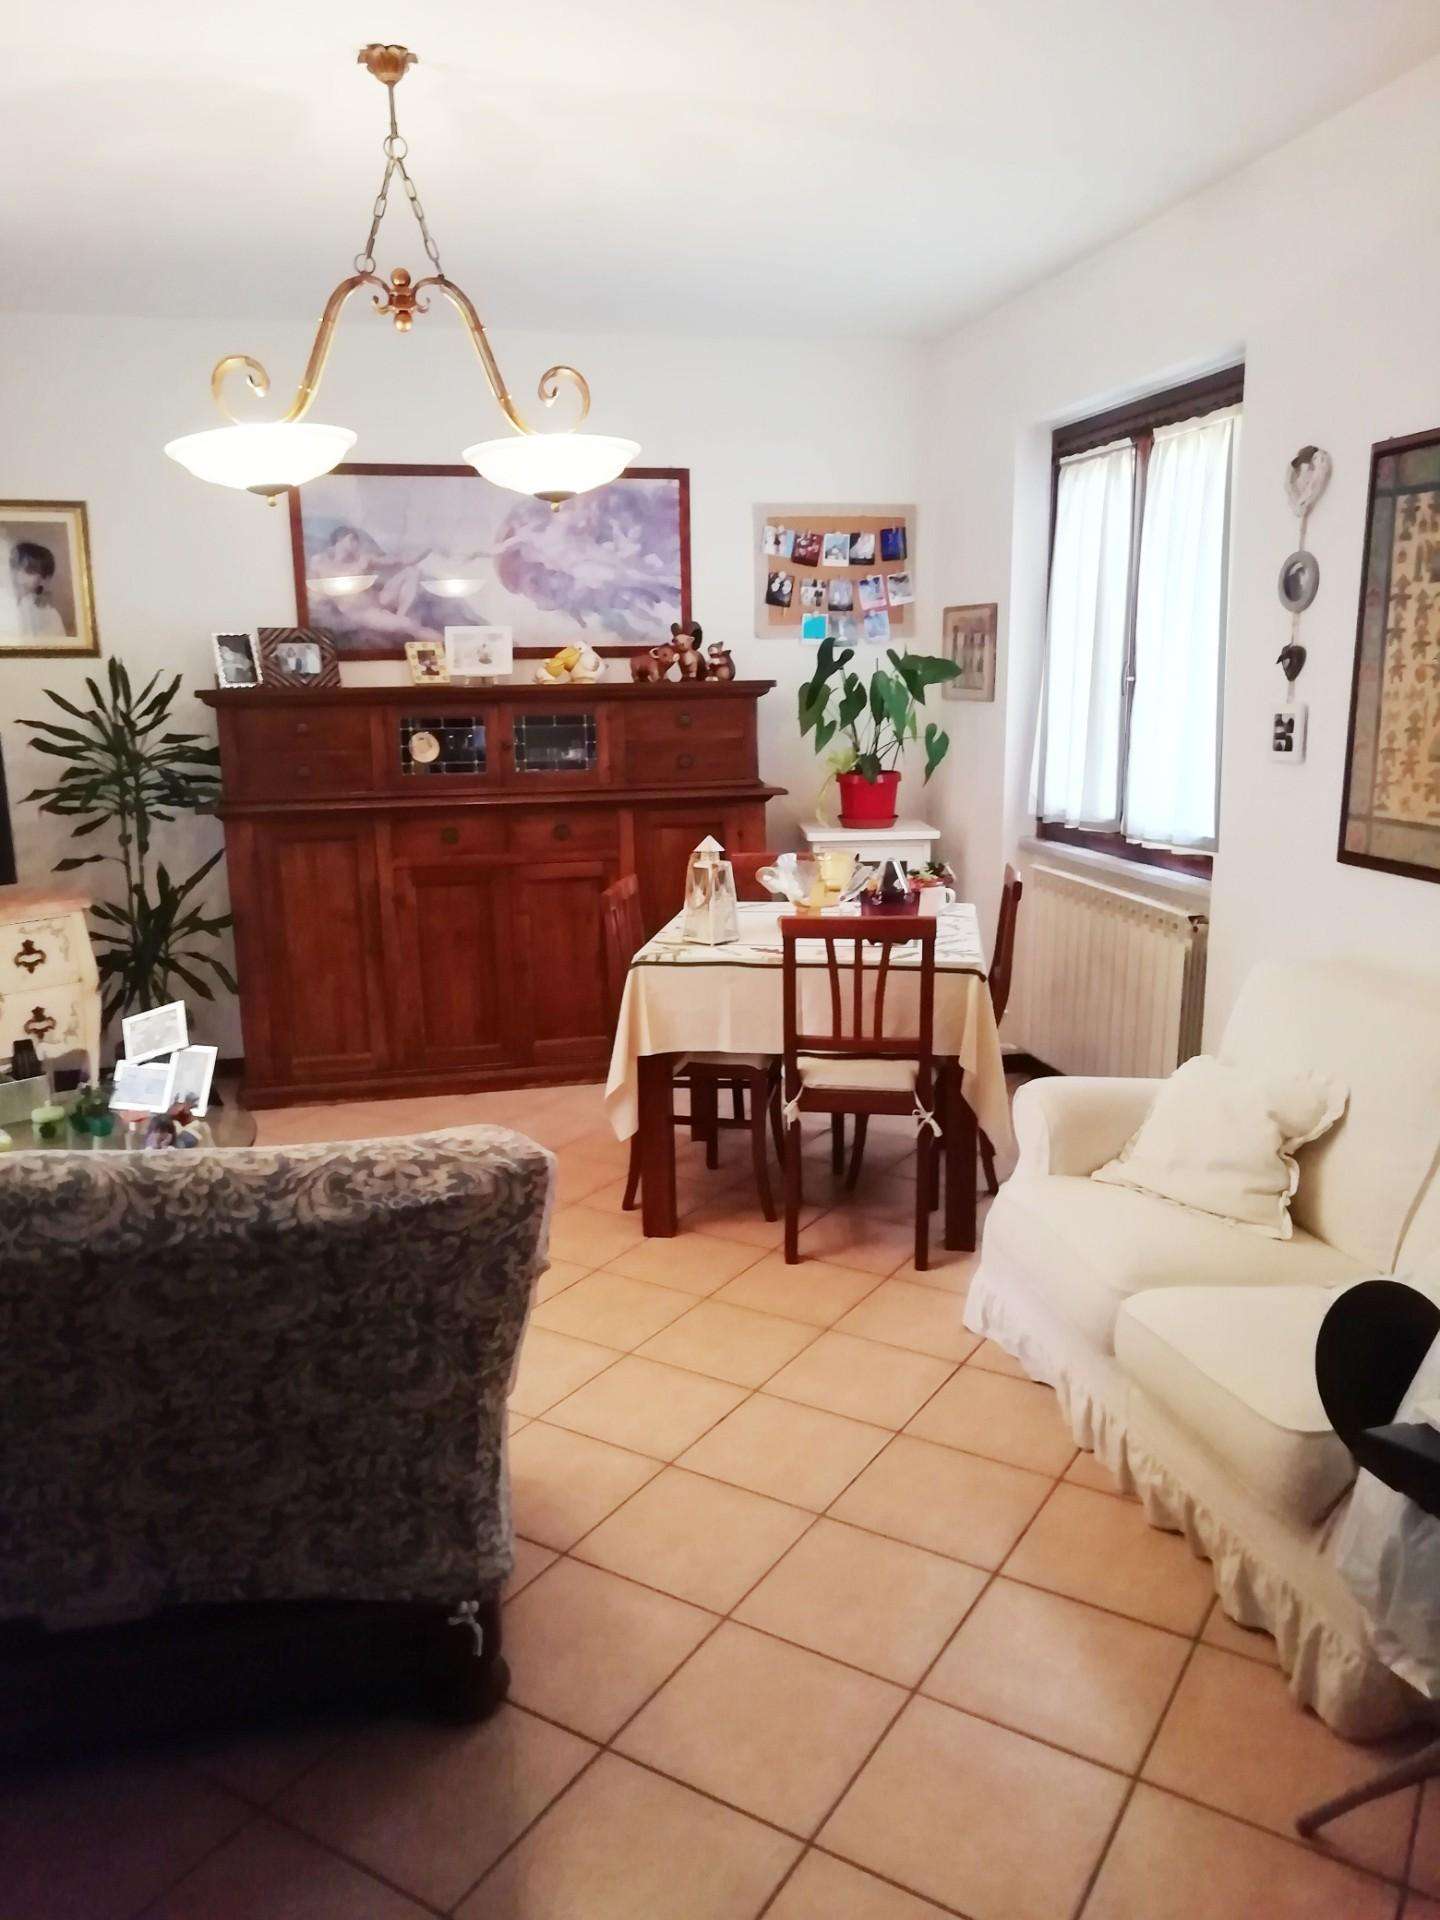 Casa Bi - Trifamiliare in Vendita a Carrara Via Spondarella,